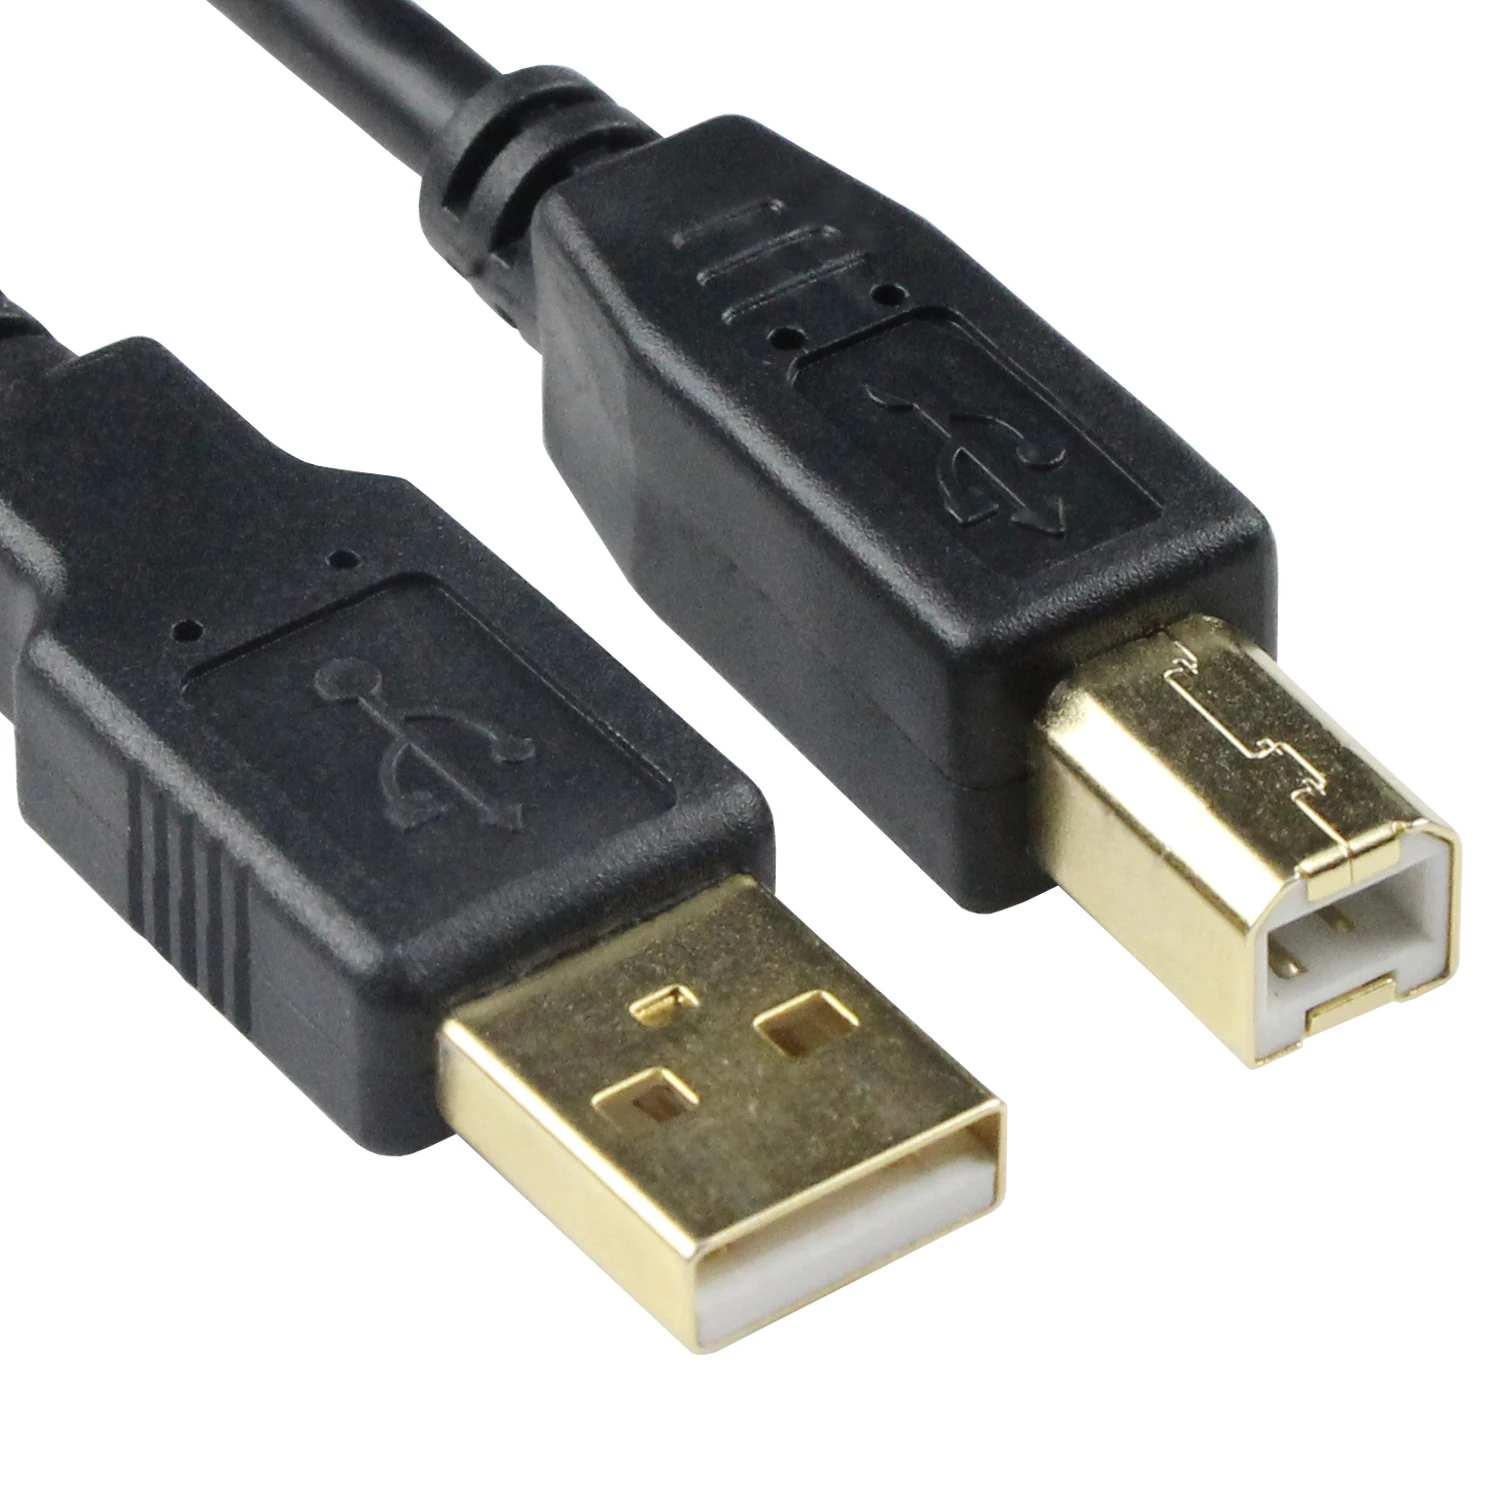 

VCOM USB 2.0 Printer Cable USB AM to BM 2.0V Black Color Gold Plated USB Cable 1.5m 1.8m 3m 5m